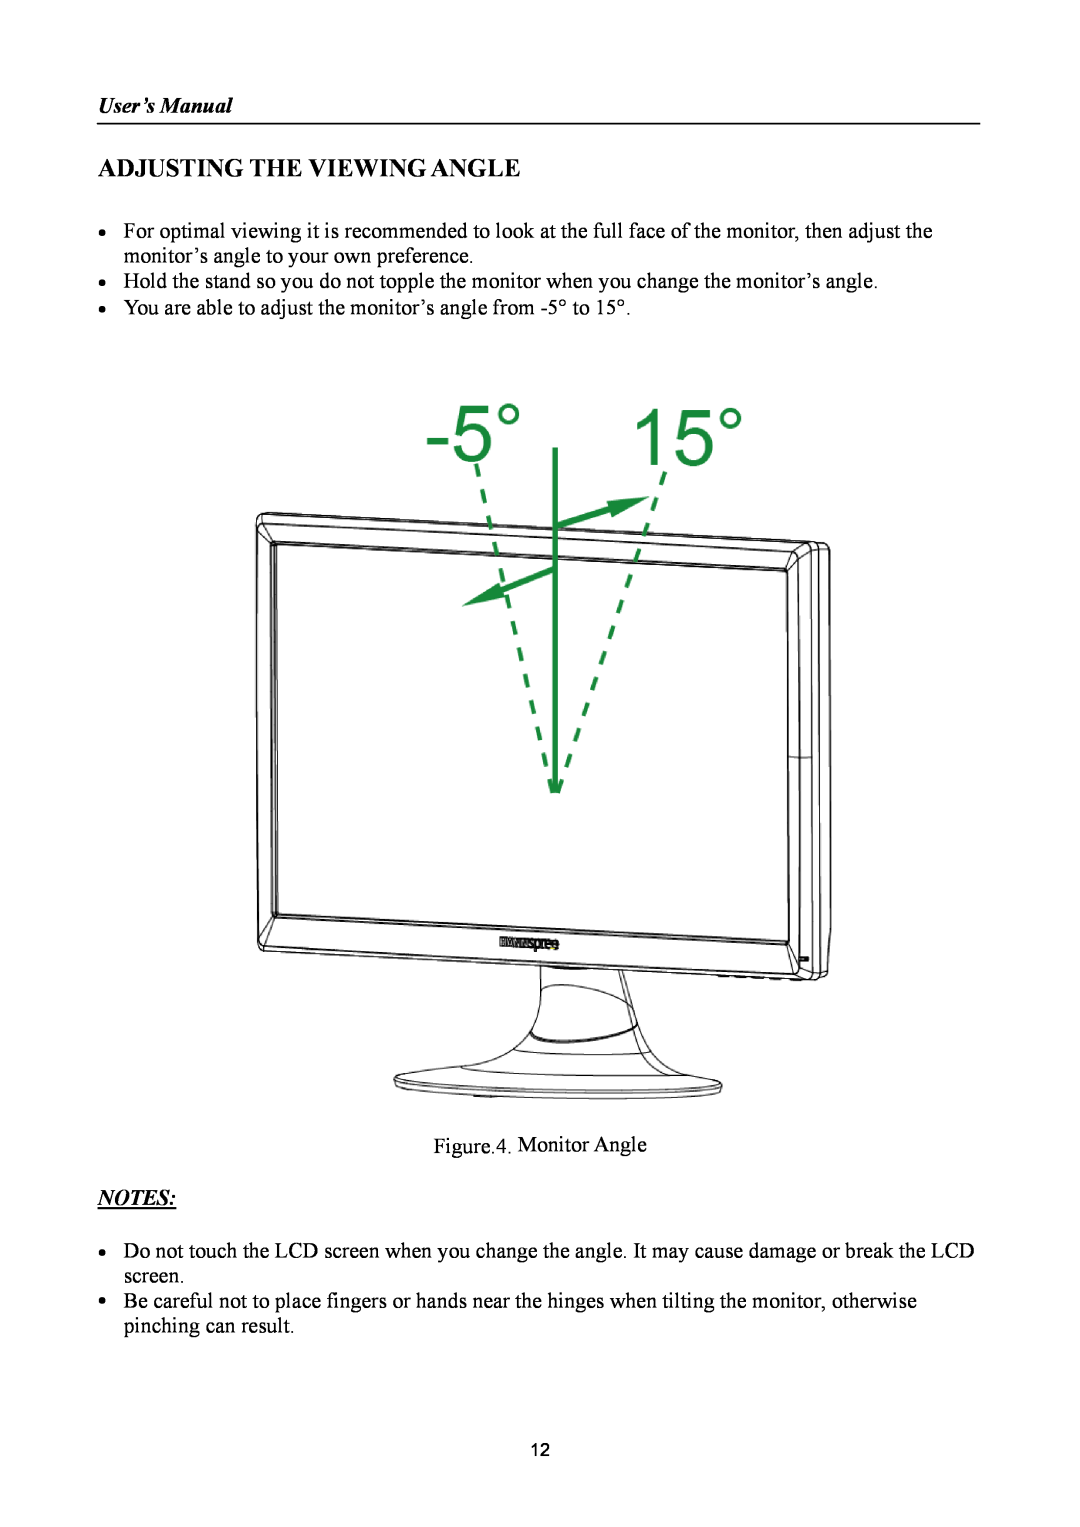 HANNspree HF205 manual Adjusting The Viewing Angle, User’s Manual 